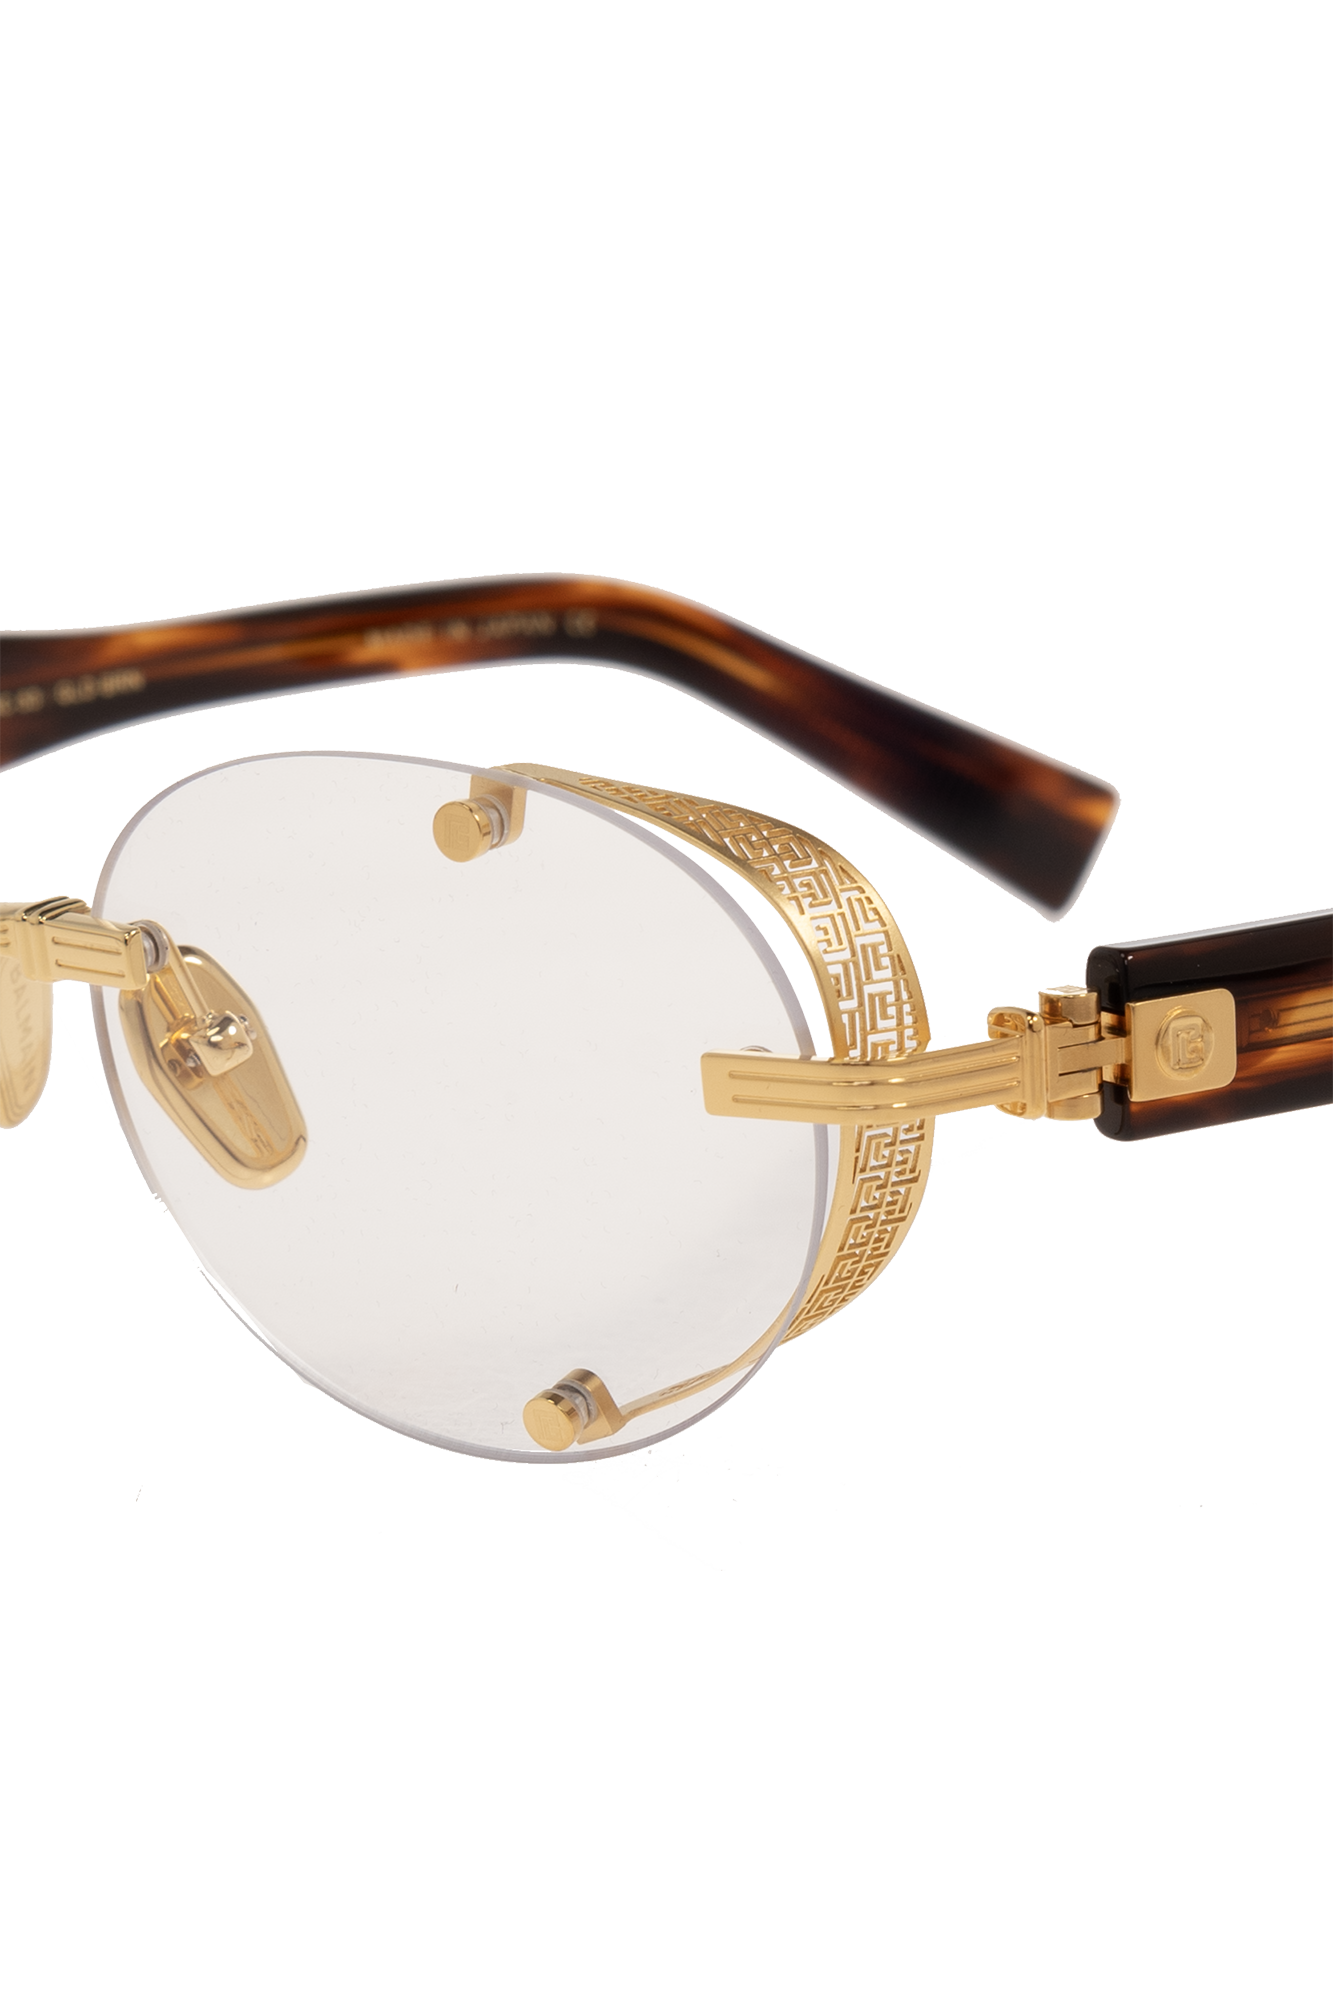 balmain buttoned ‘Monsieur’ optical glasses